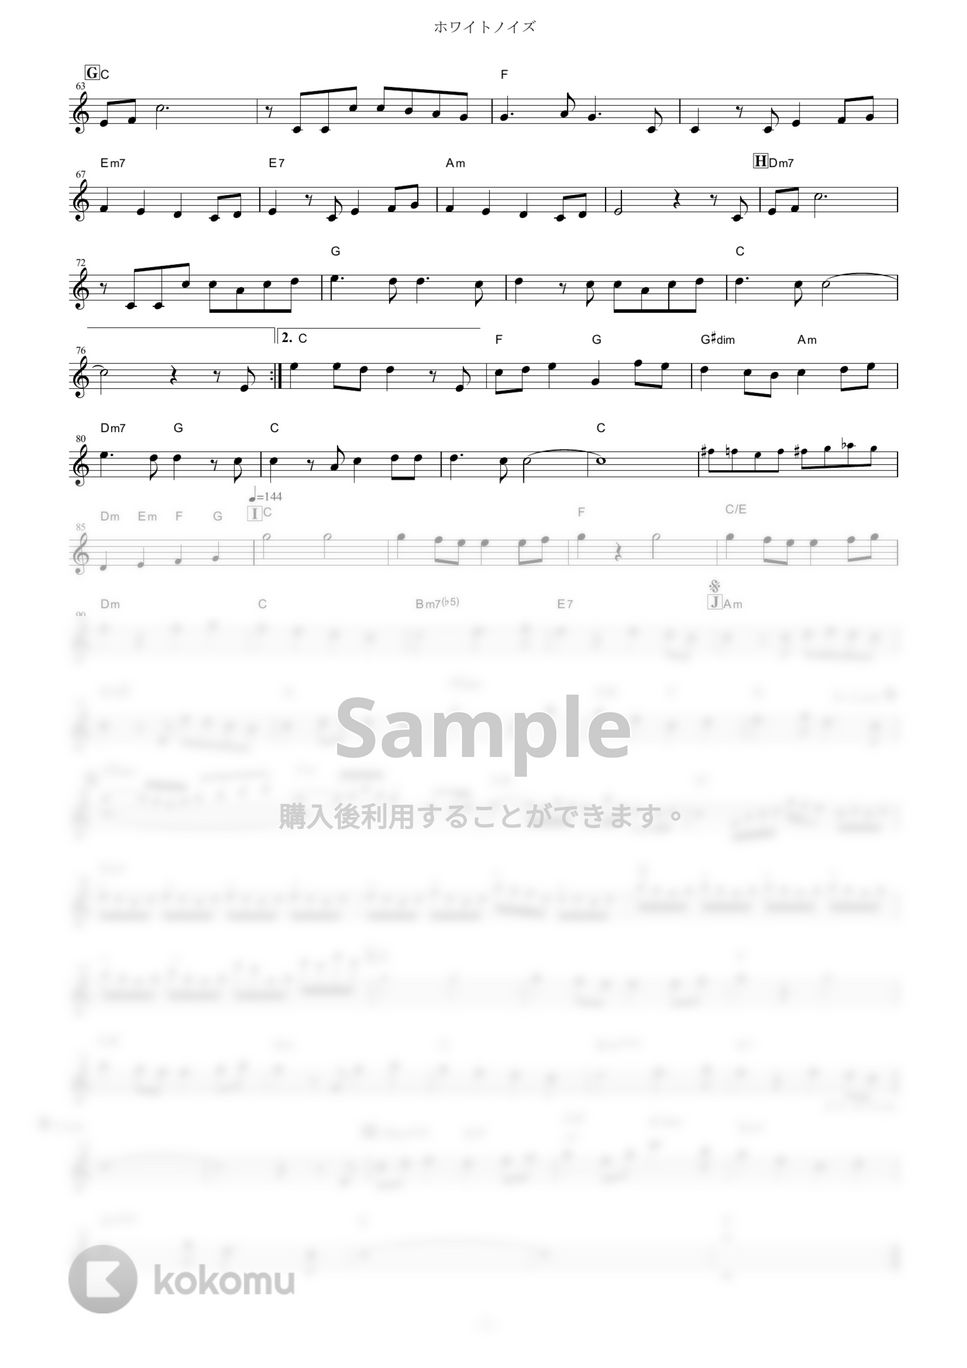 Official髭男dism - ホワイトノイズ (『東京リベンジャーズ』 / in Eb) by muta-sax